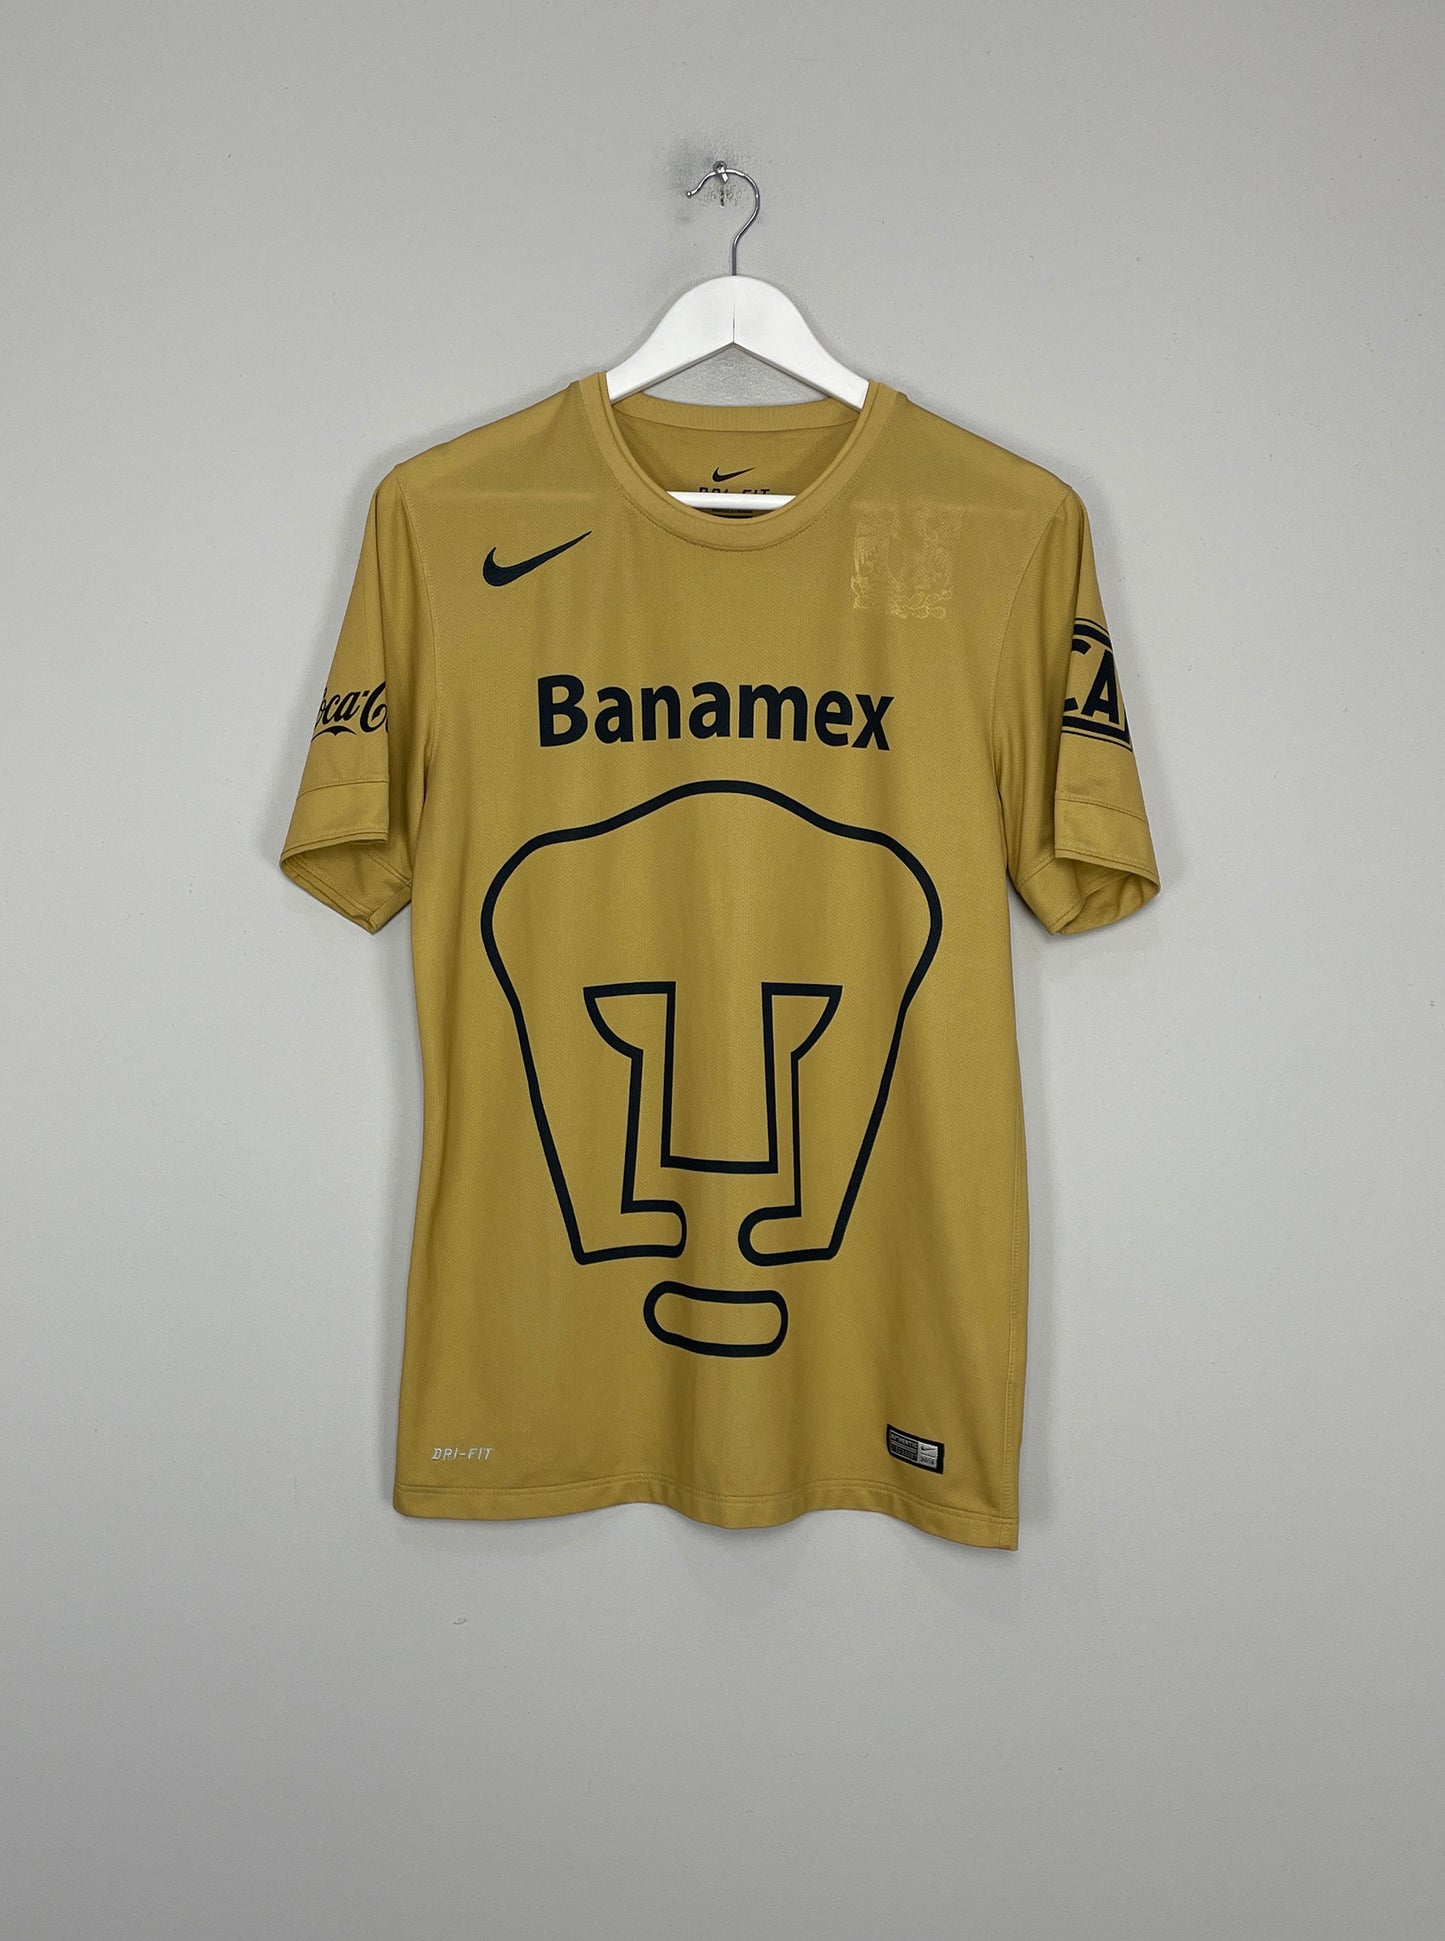 Image of the UNAM Pumas shirt from the 2014/15 season